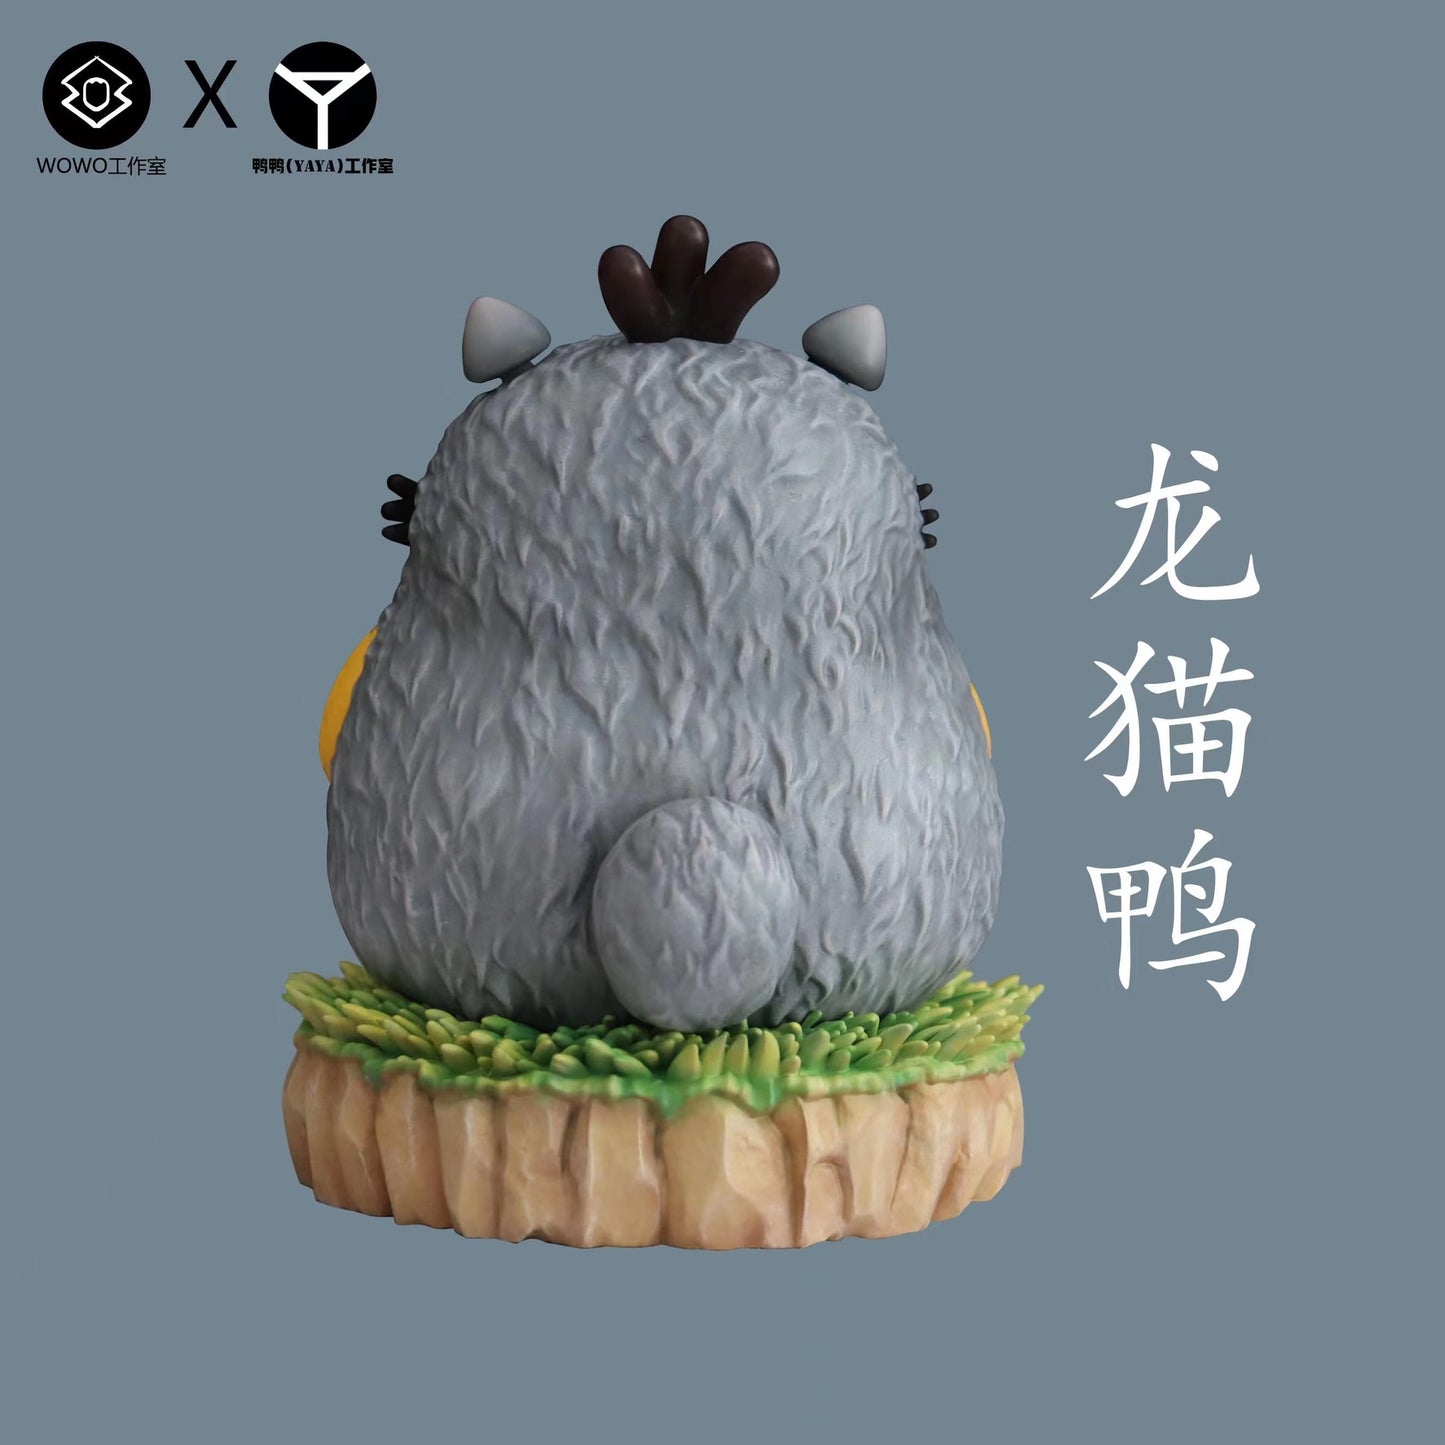 [PREORDER CLOSED] Mini Figure [WOWO] - Totoro Psyduck